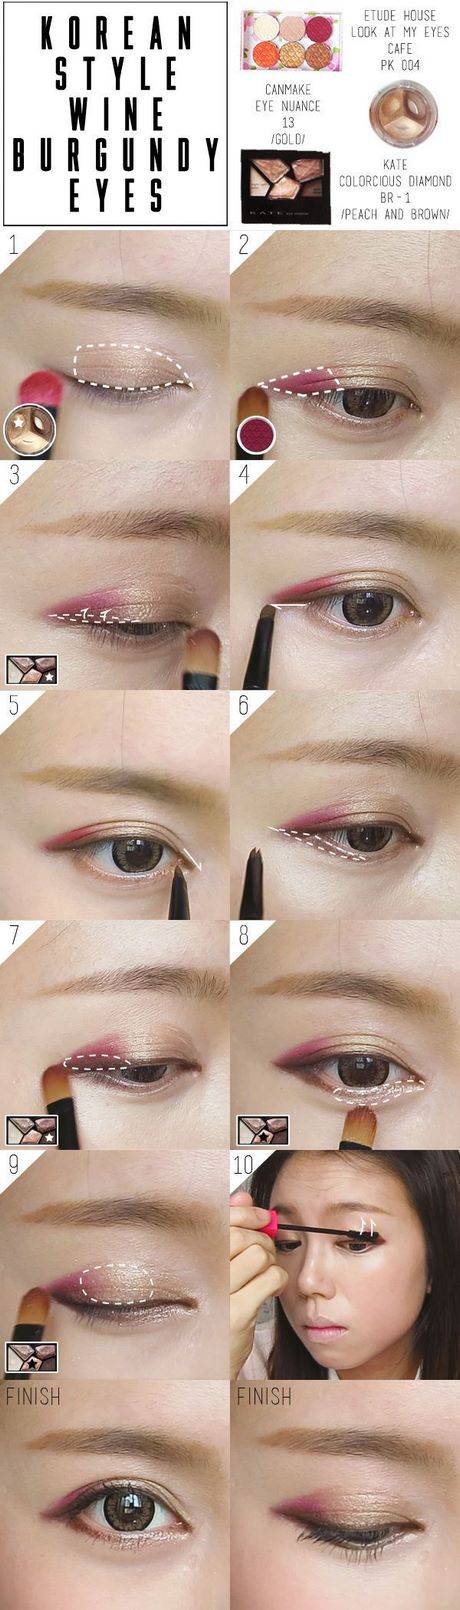 canmake-makeup-tutorial-69_11 Canmake make-up tutorial